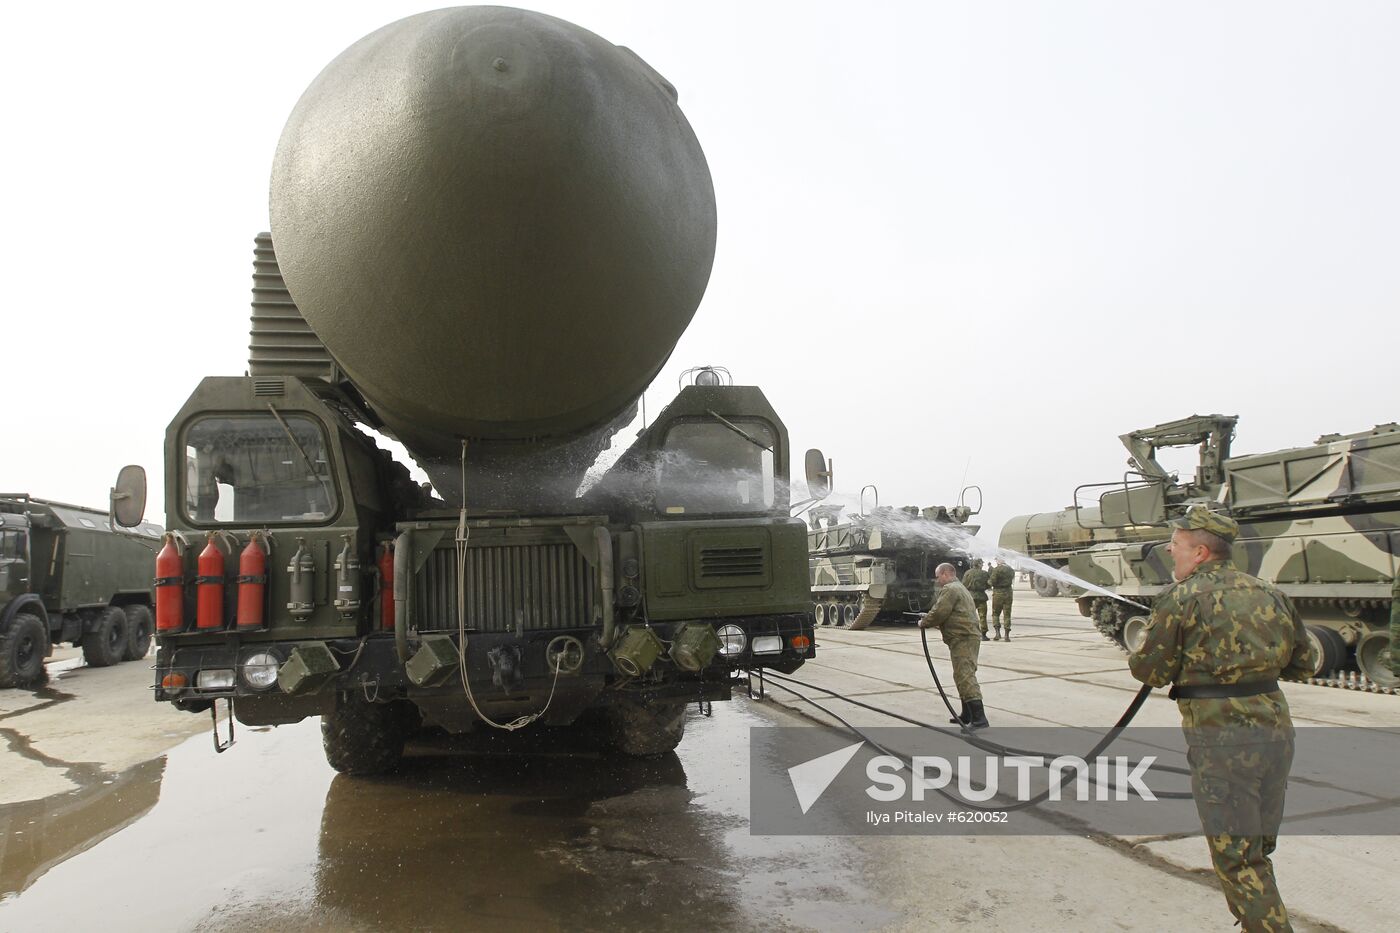 Topol M missile system shown at Alabino range